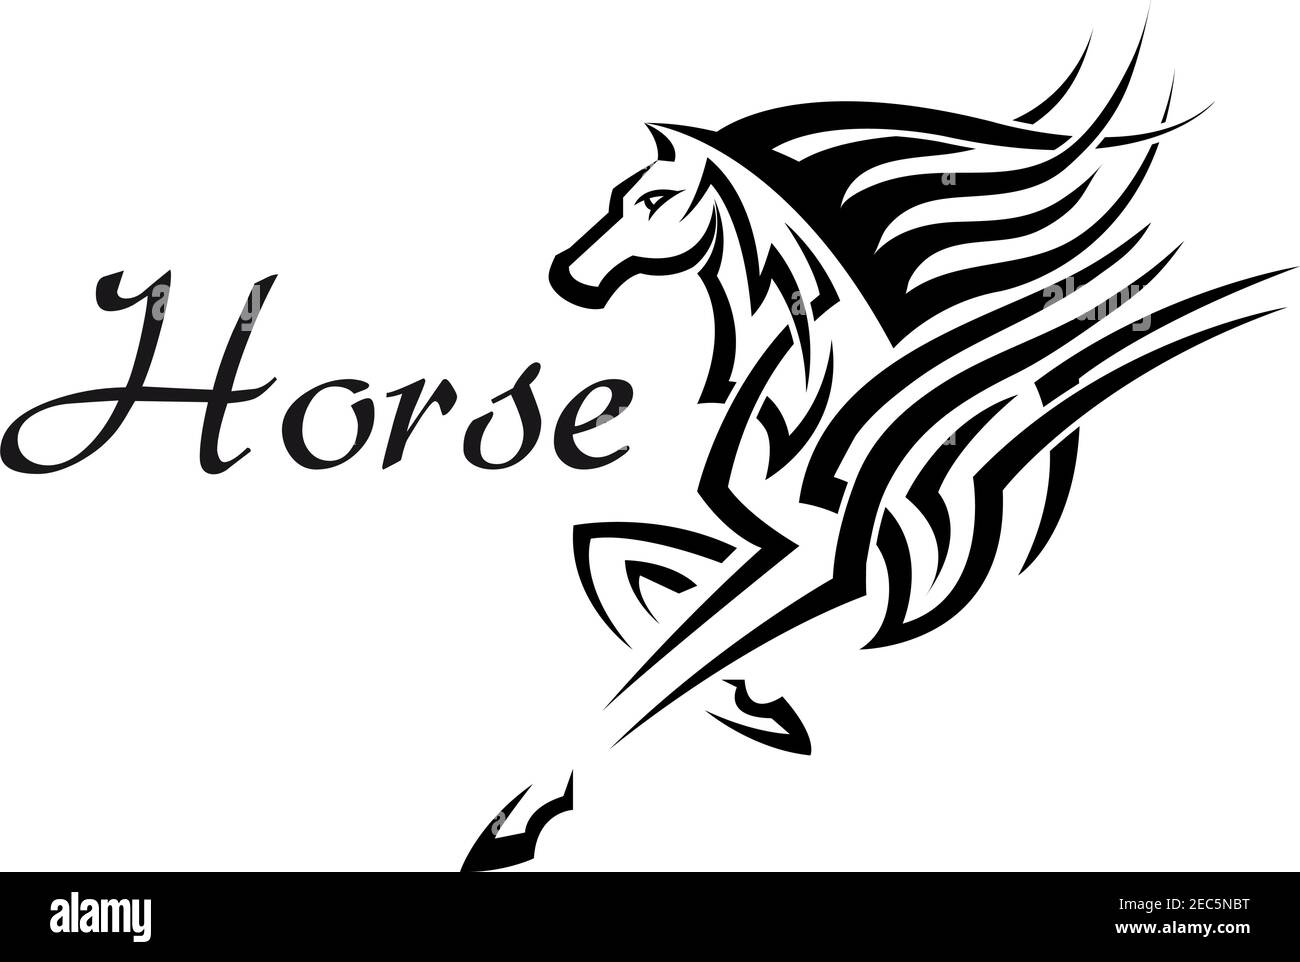 How to draw horse tribal tattoo | horse tattoo drawing idea - YouTube